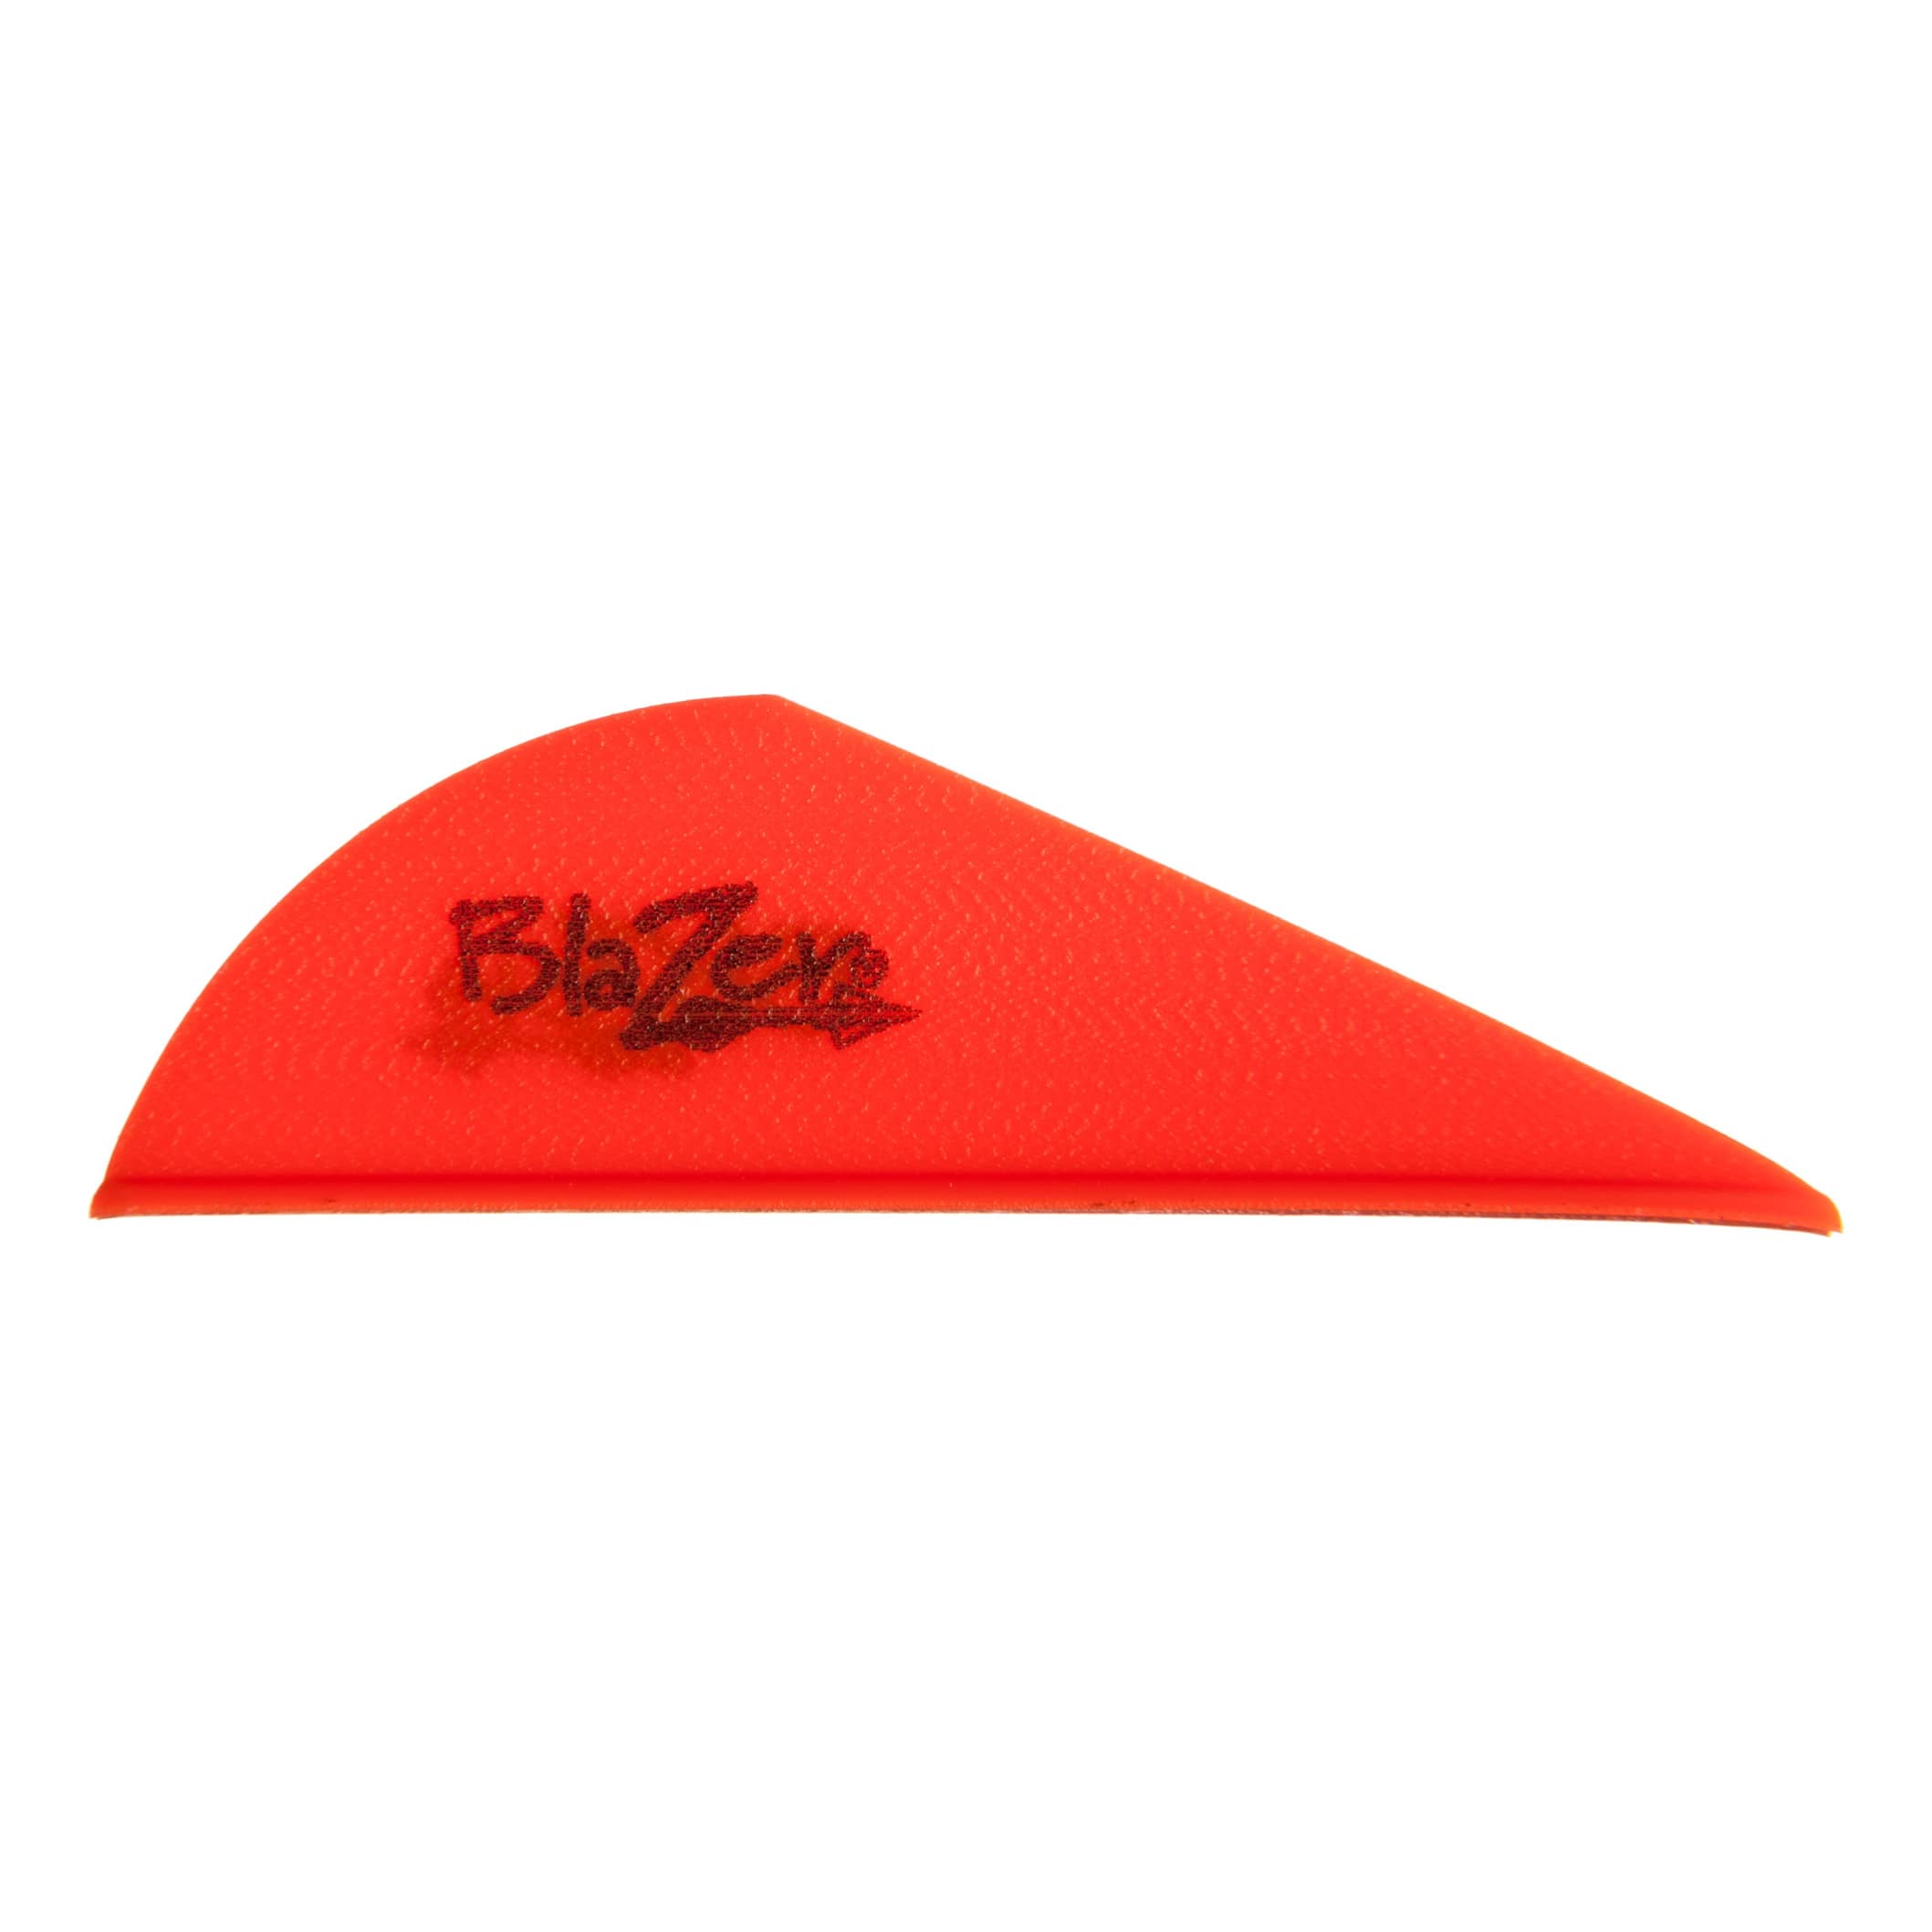 Bohning Blazer™ Broadhead Vanes - Red